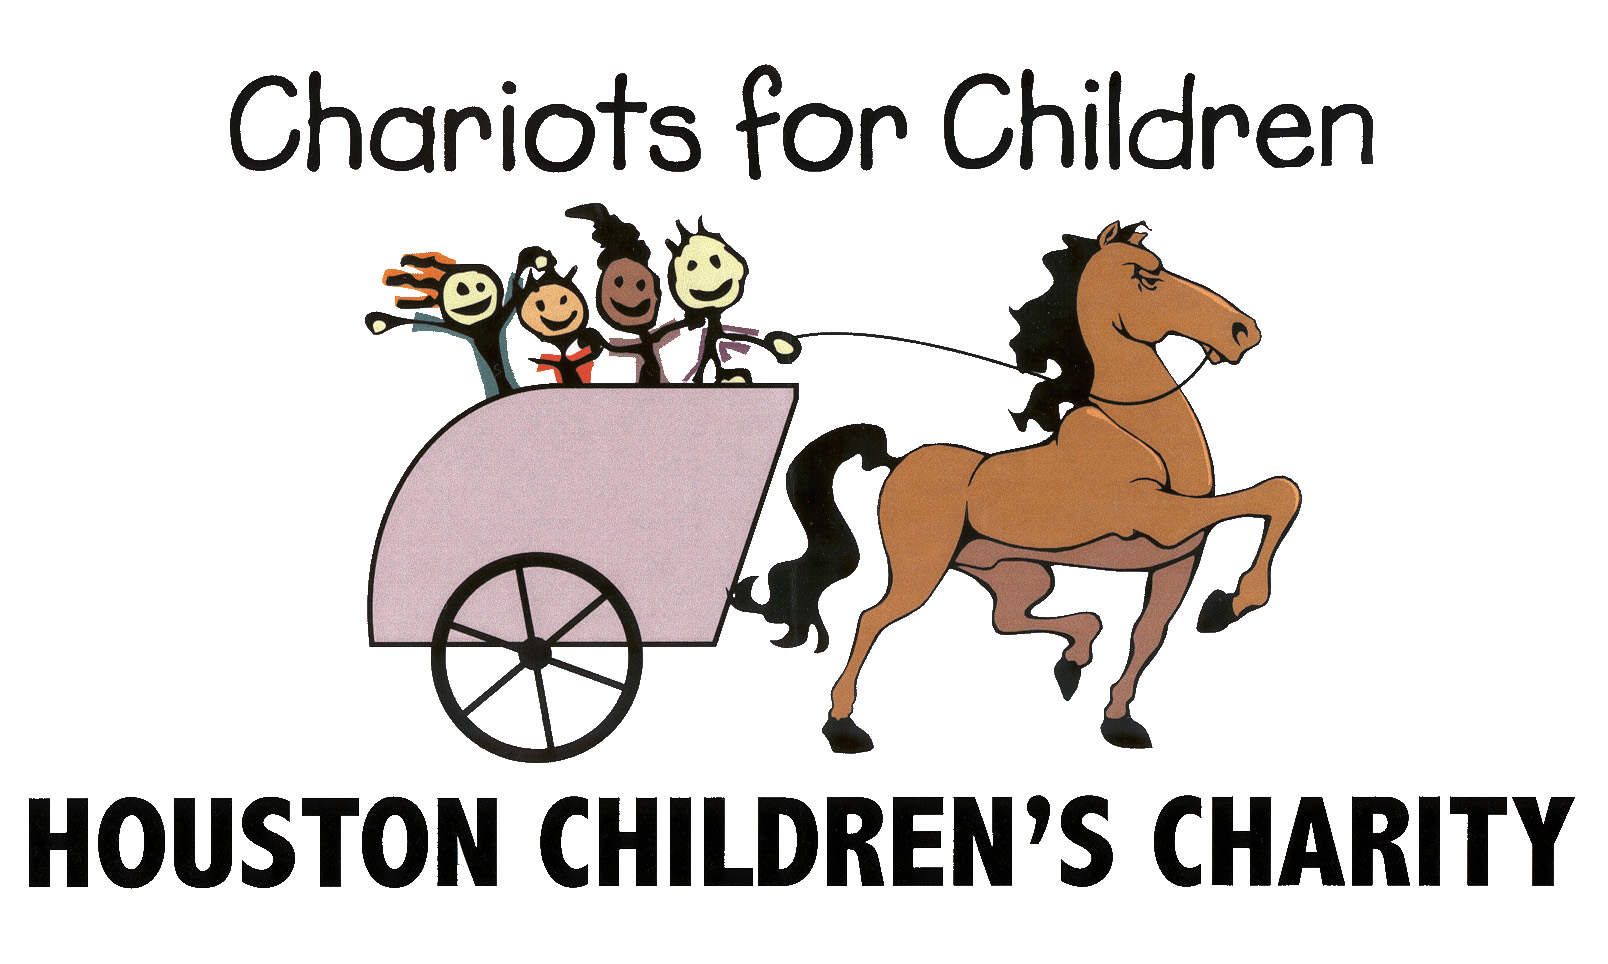 Chariots for Children